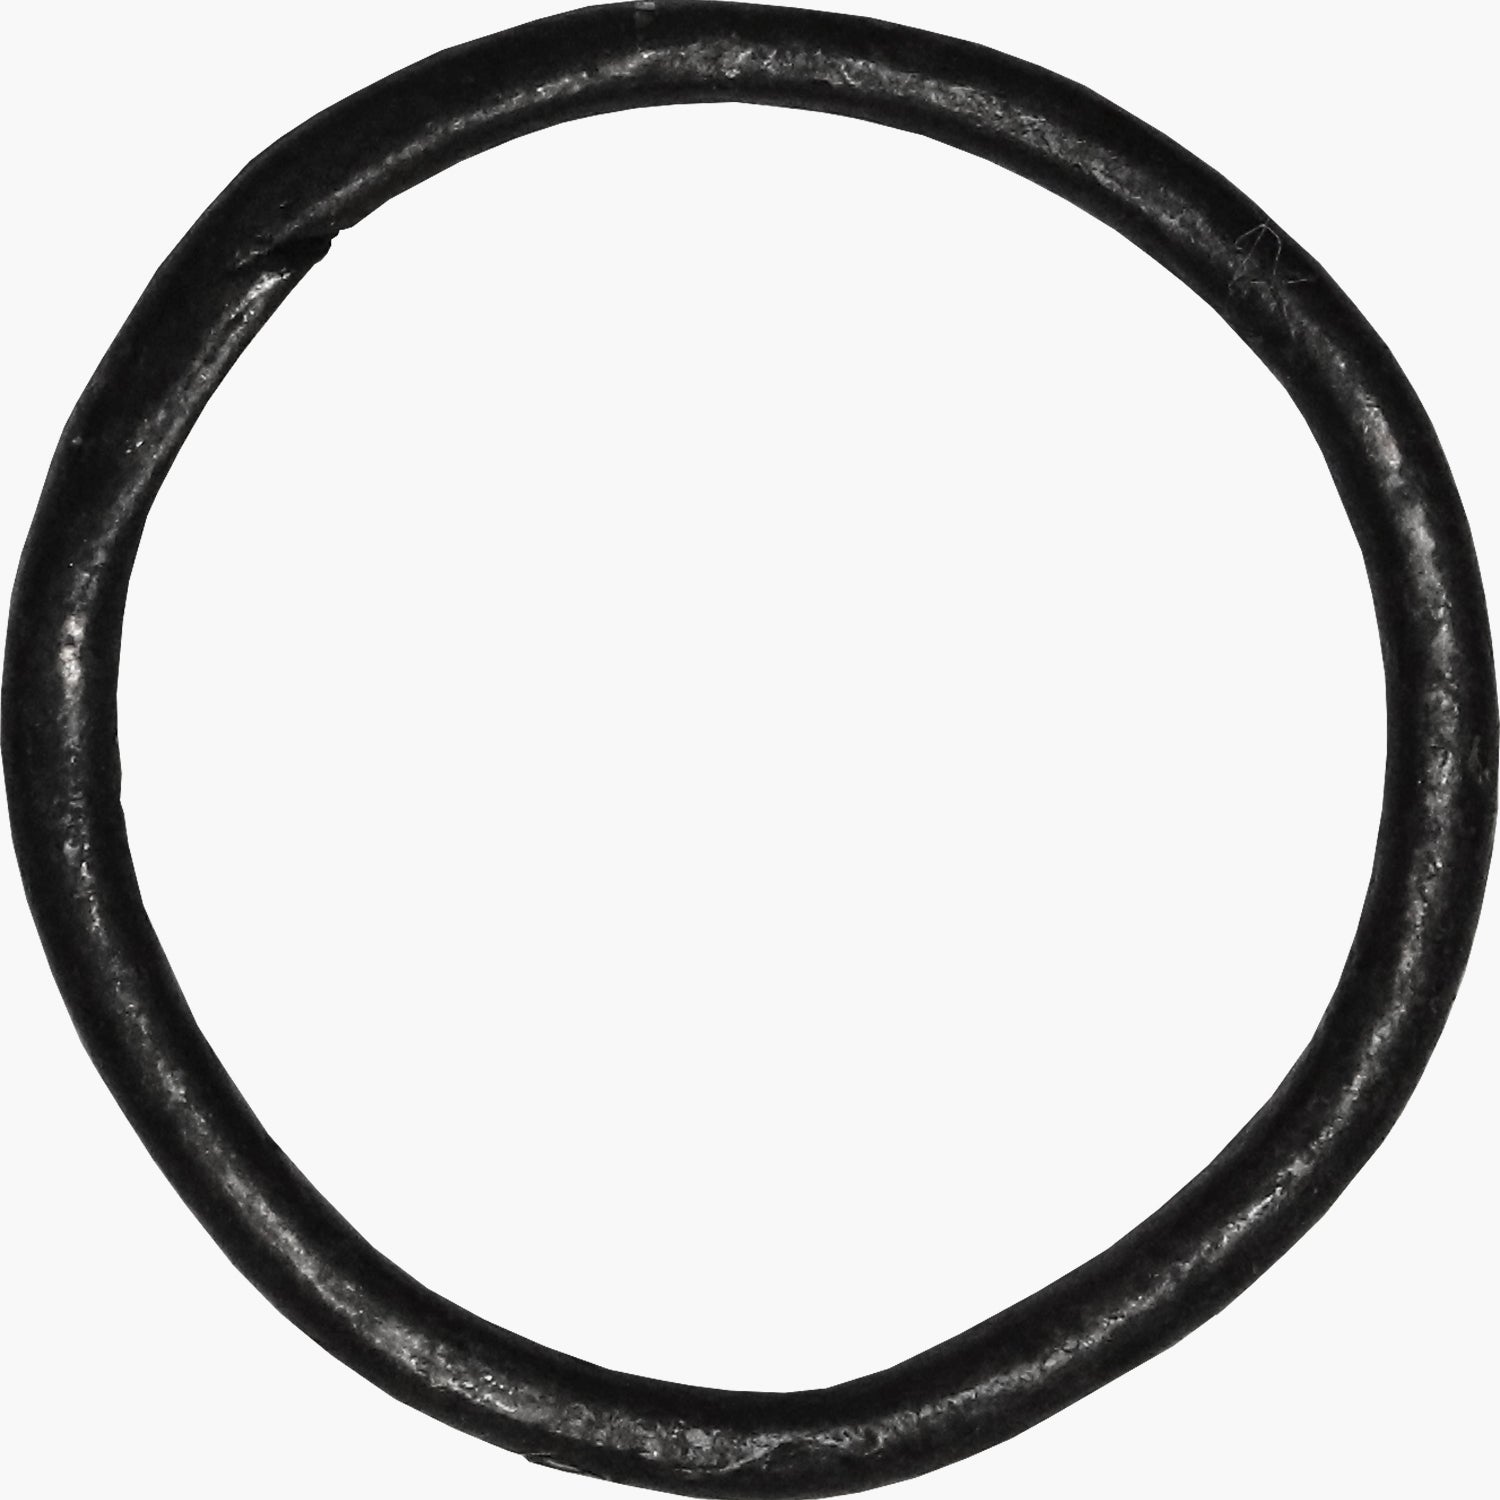 Celtic Bronze Ring – A Practical Status Symbol